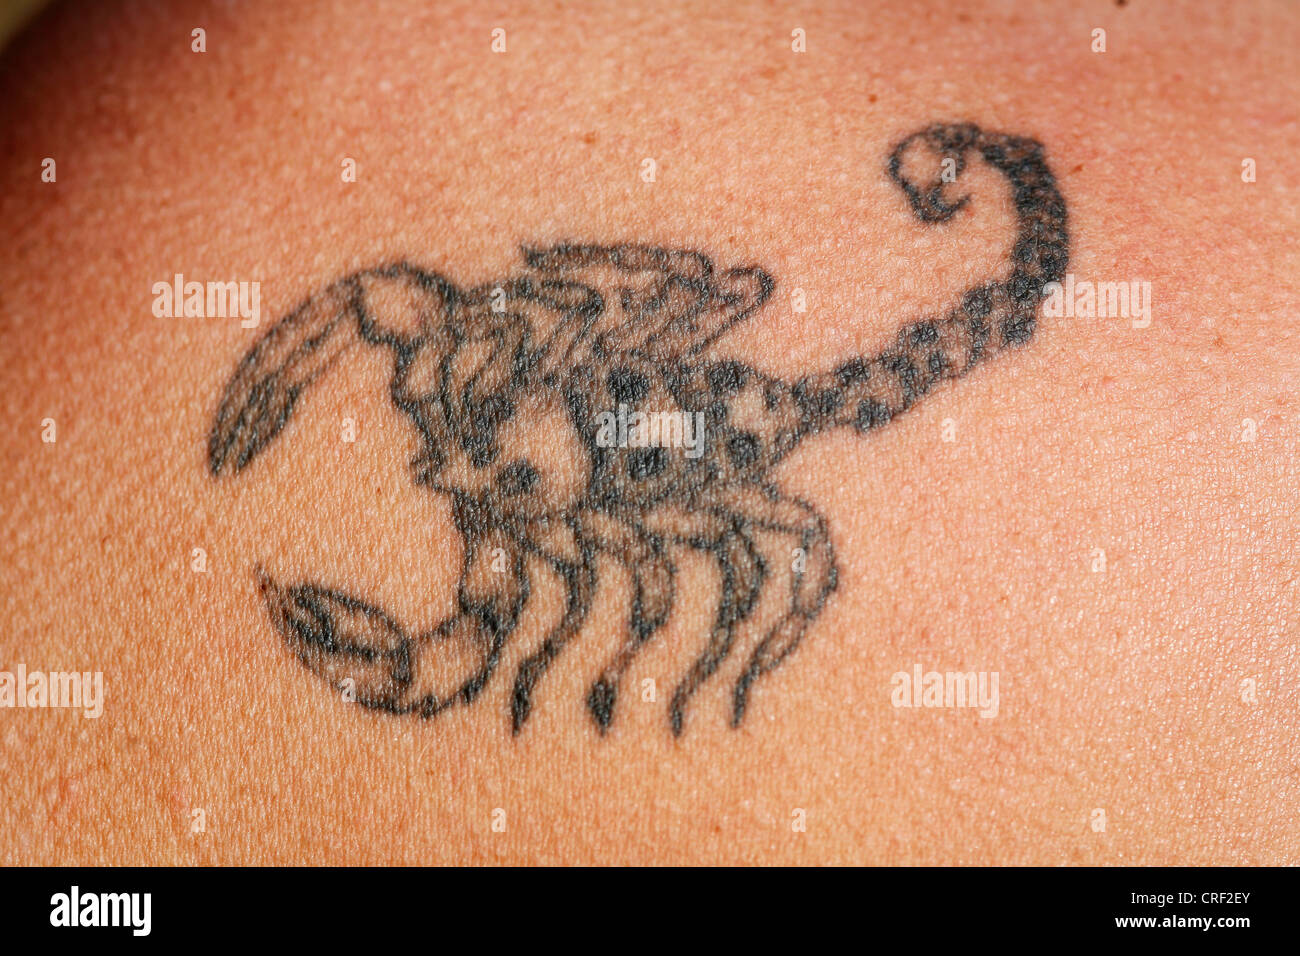 Simple Scorpion Tattoo || Best tattoo design - YouTube